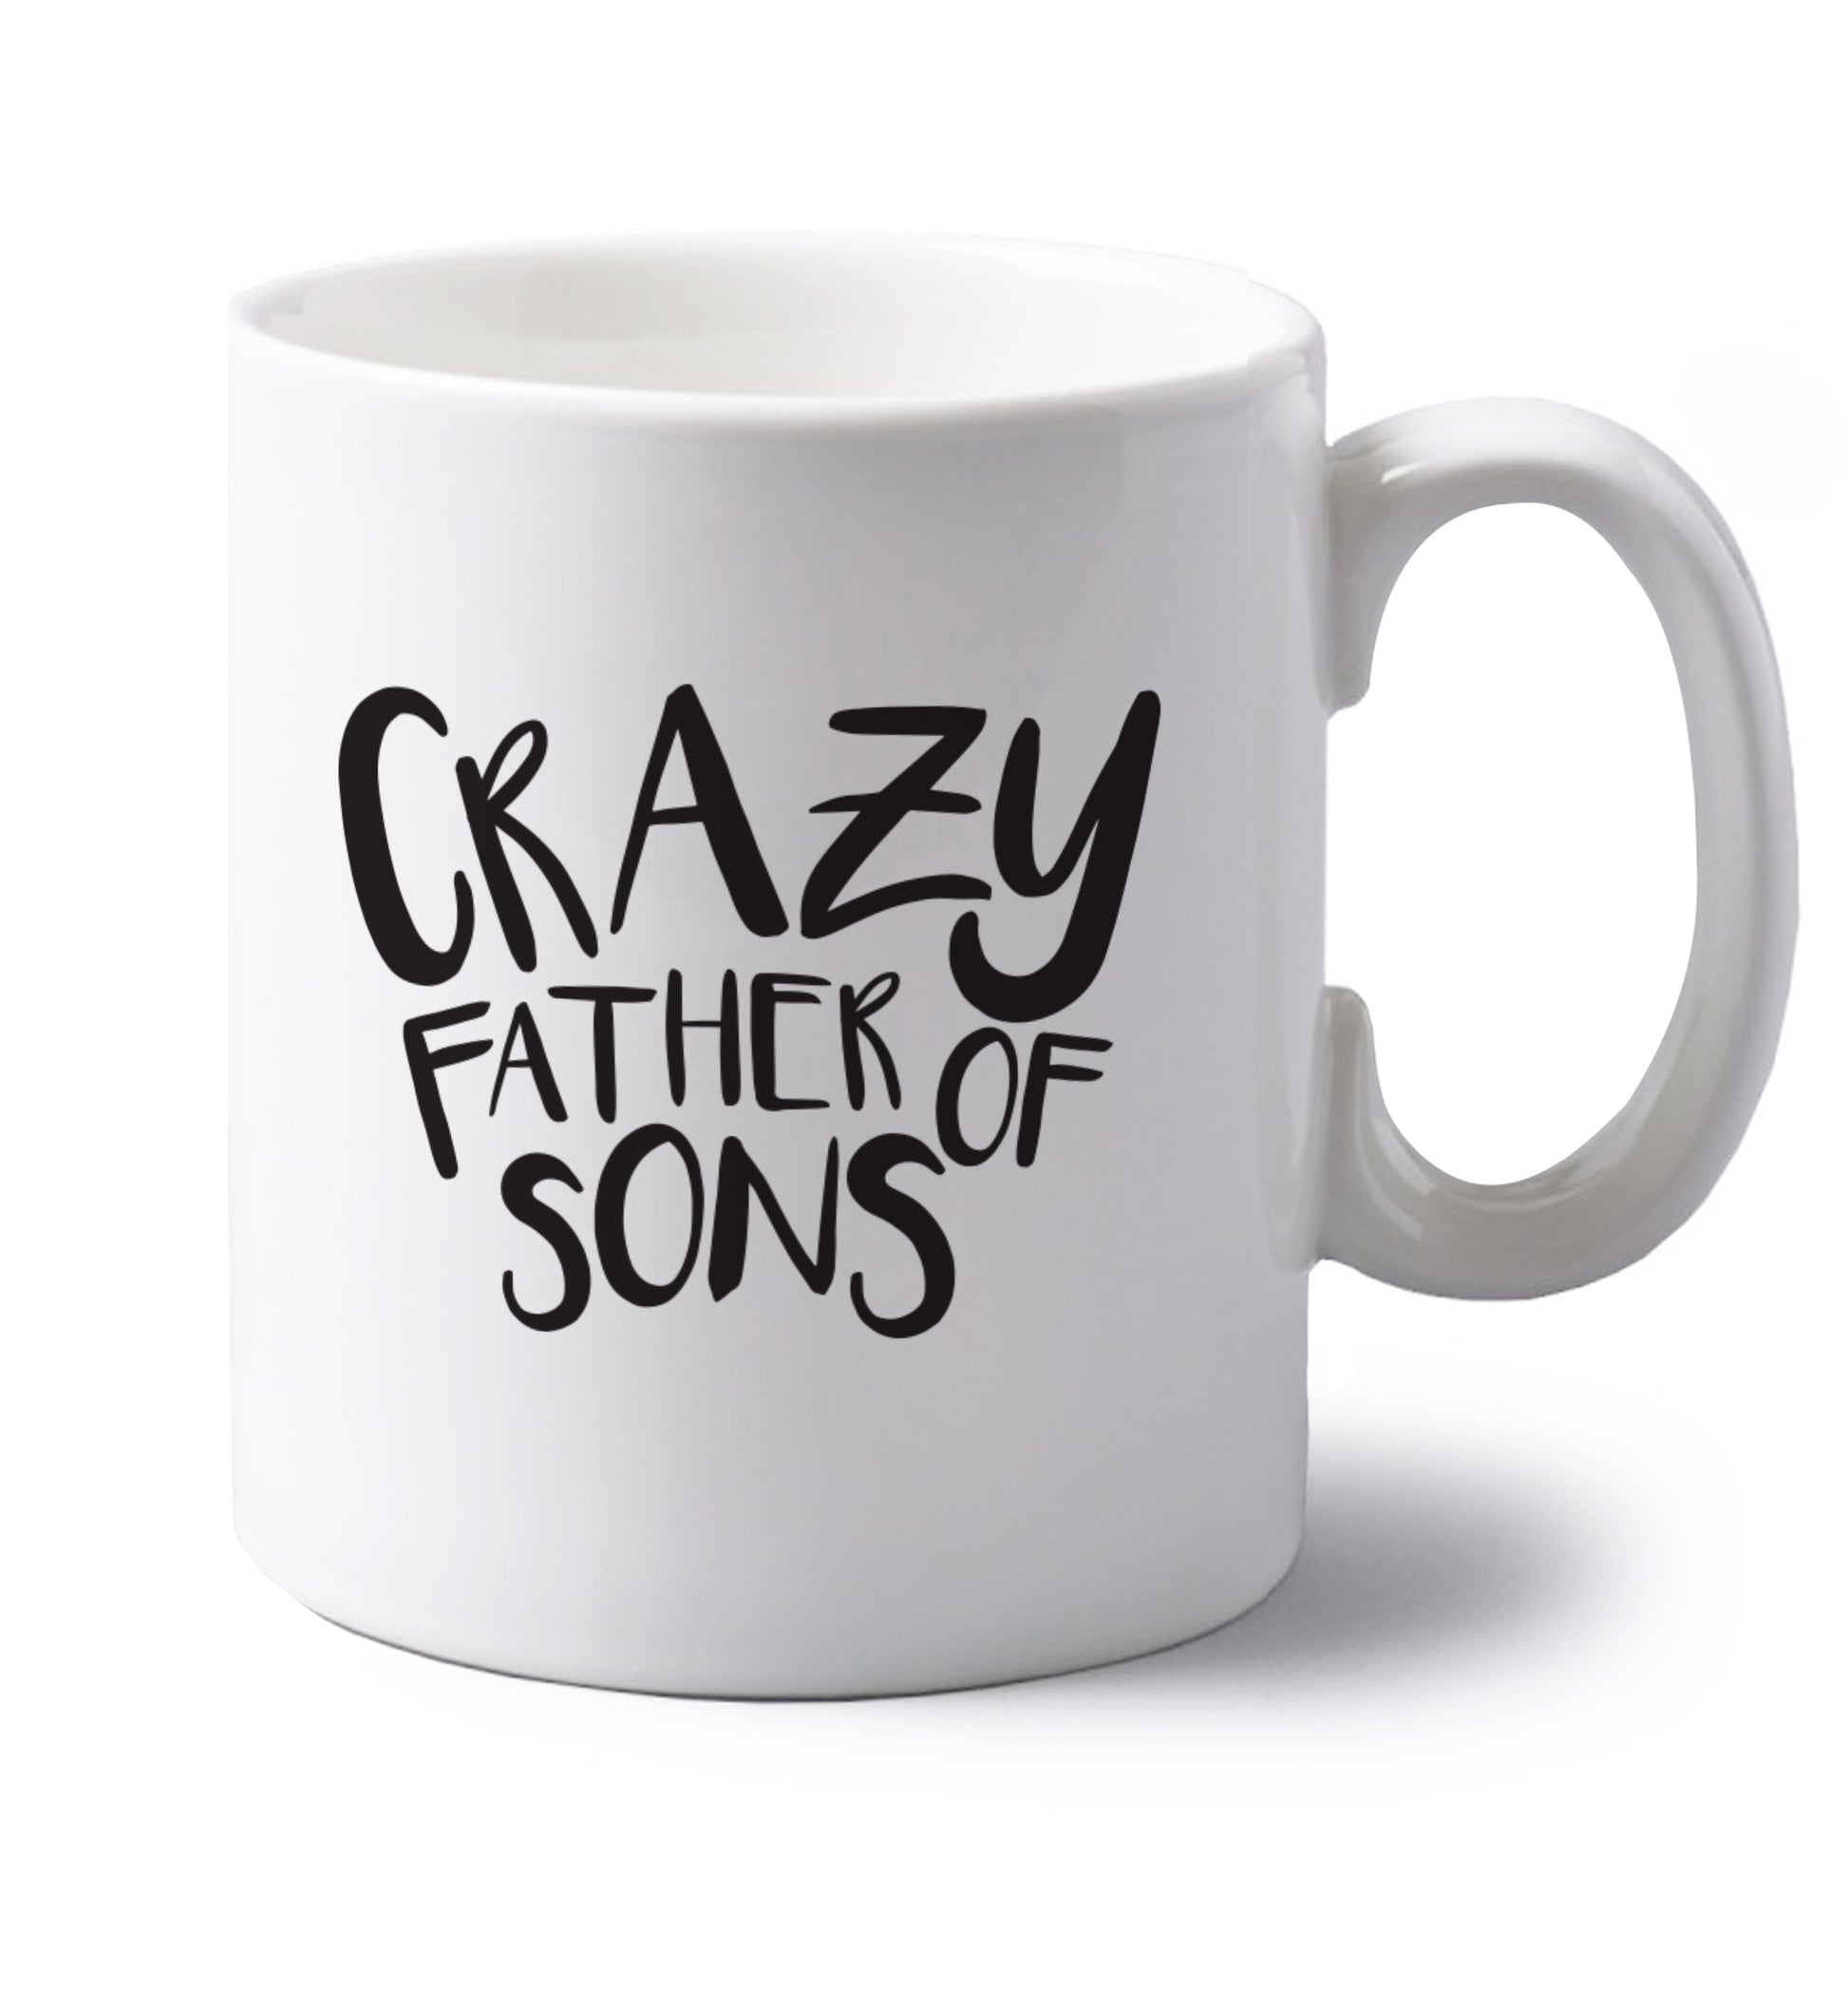 Crazy father of sons left handed white ceramic mug 